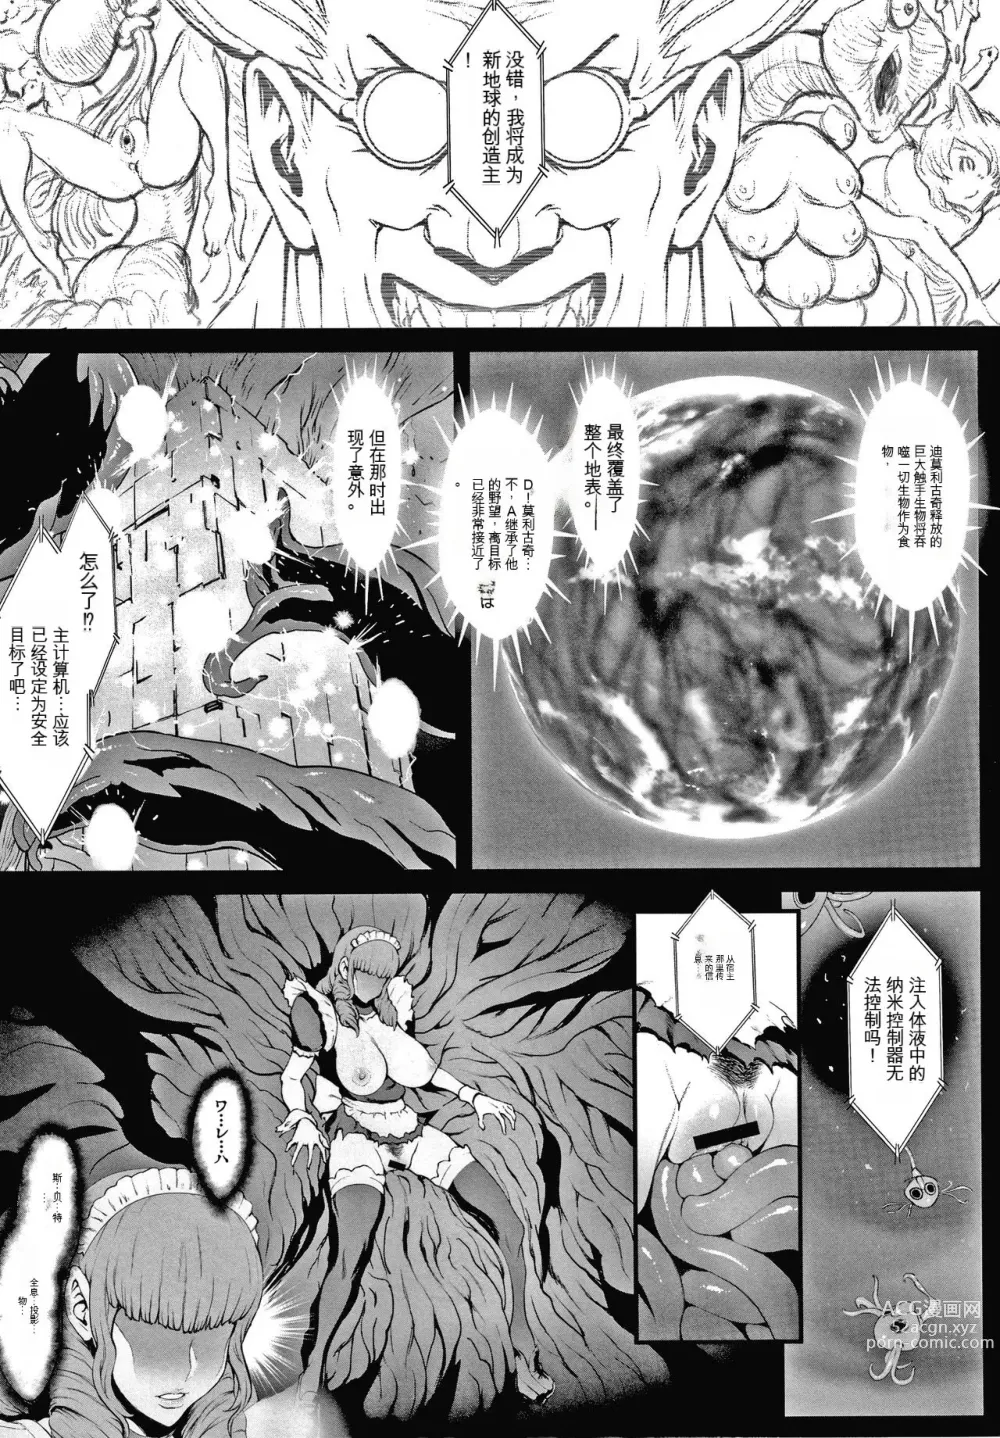 Page 156 of manga Haramase no Hoshi - STAR OF STALLION